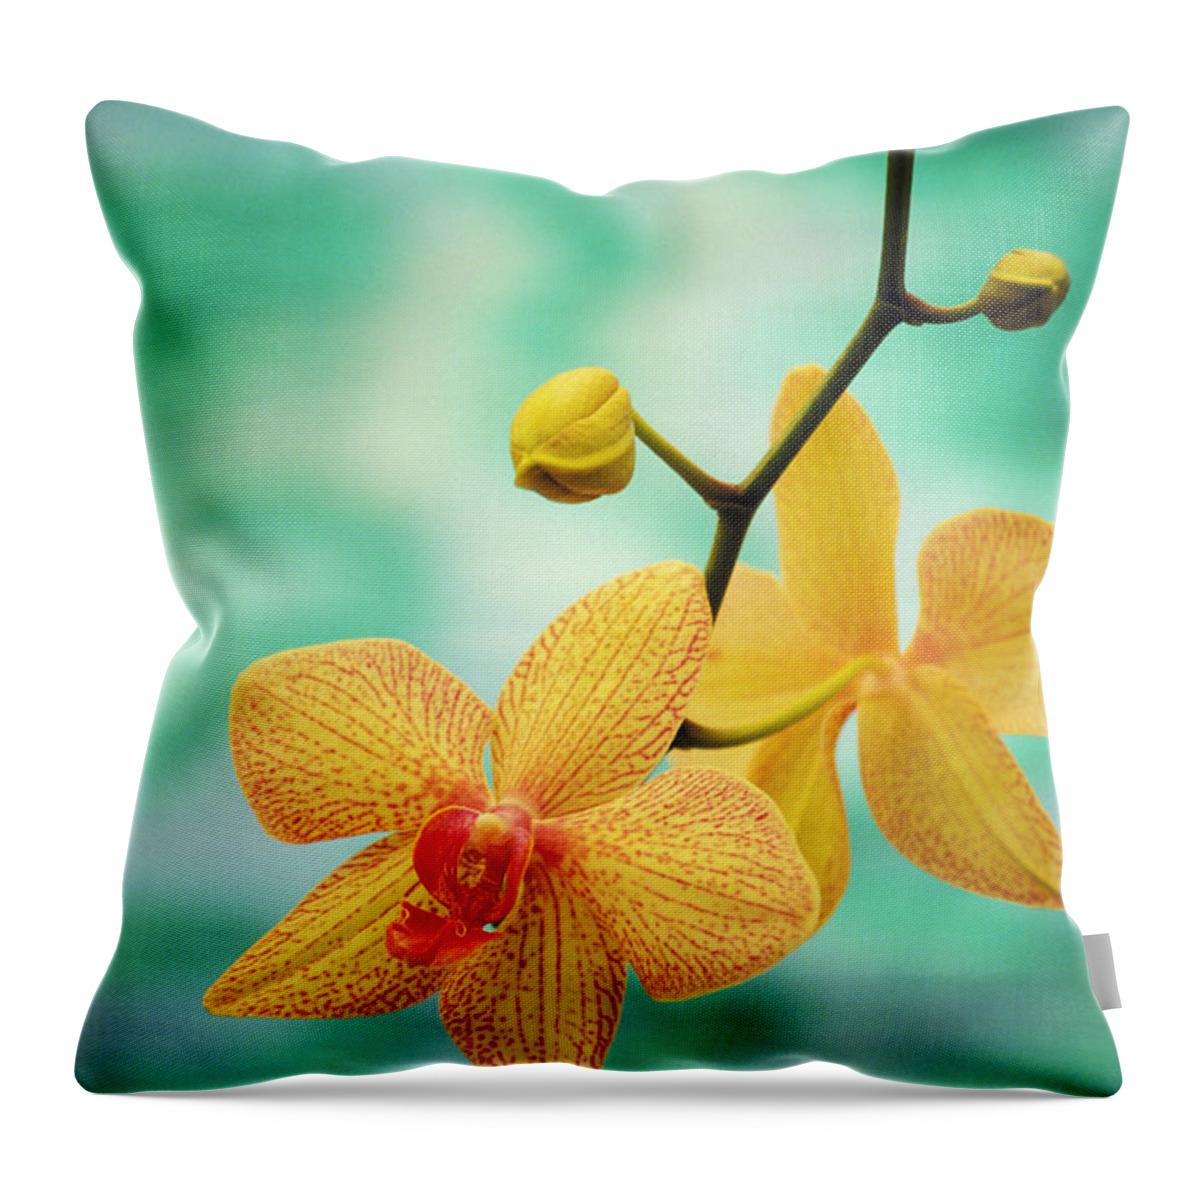 26-csm0163 Throw Pillow featuring the photograph Dendrobium by Allan Seiden - Printscapes